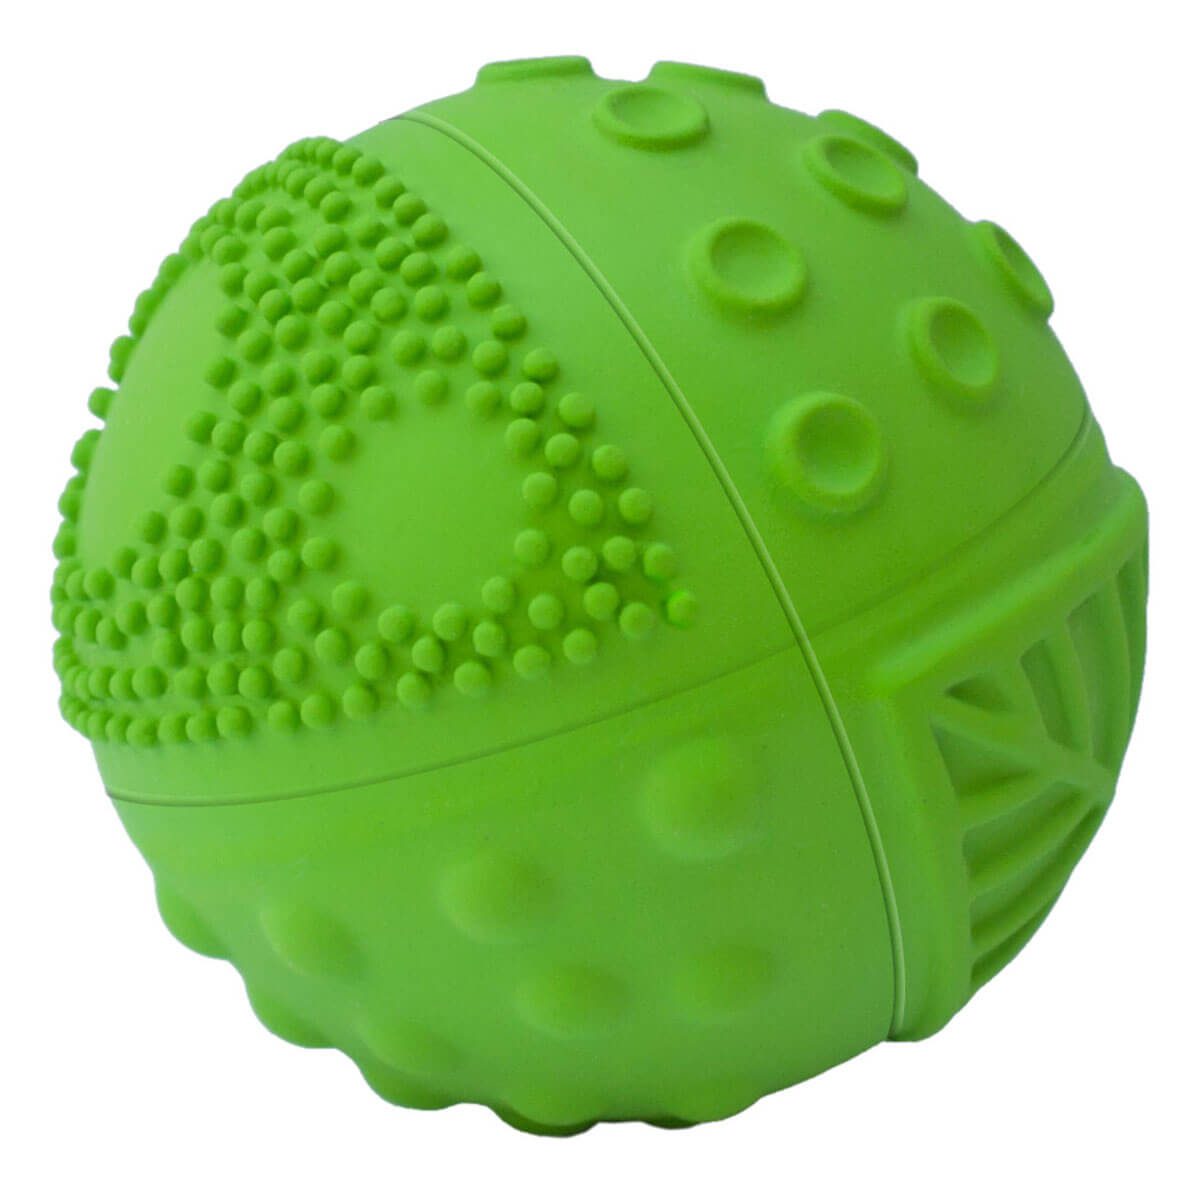 Meadow Sensory Ball Petit (3") - 100% natural rubber - CaaOcho Collection